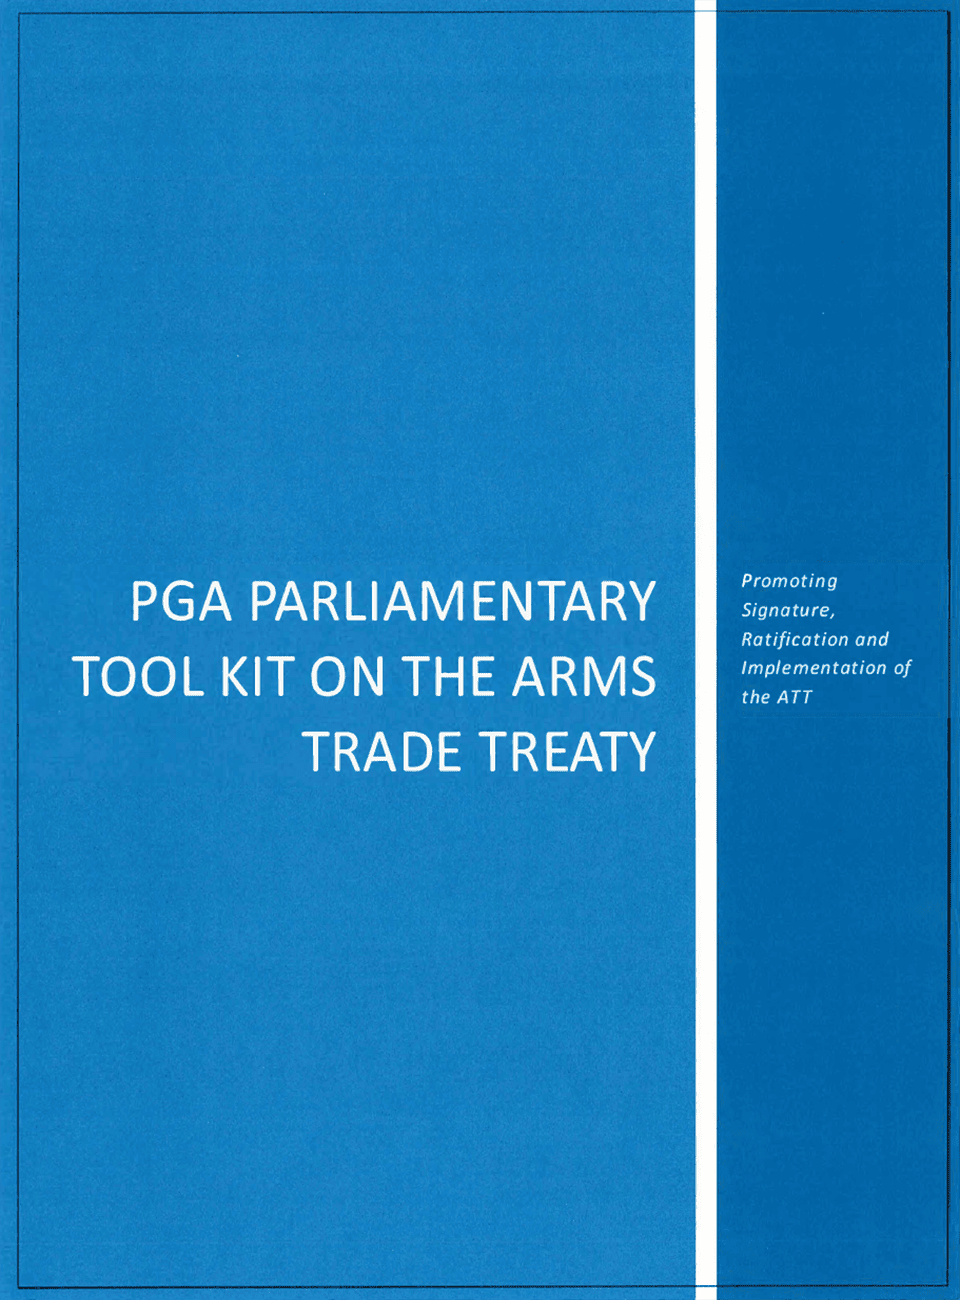 Parliamentary Toolkit on the Arms Trade Treaty